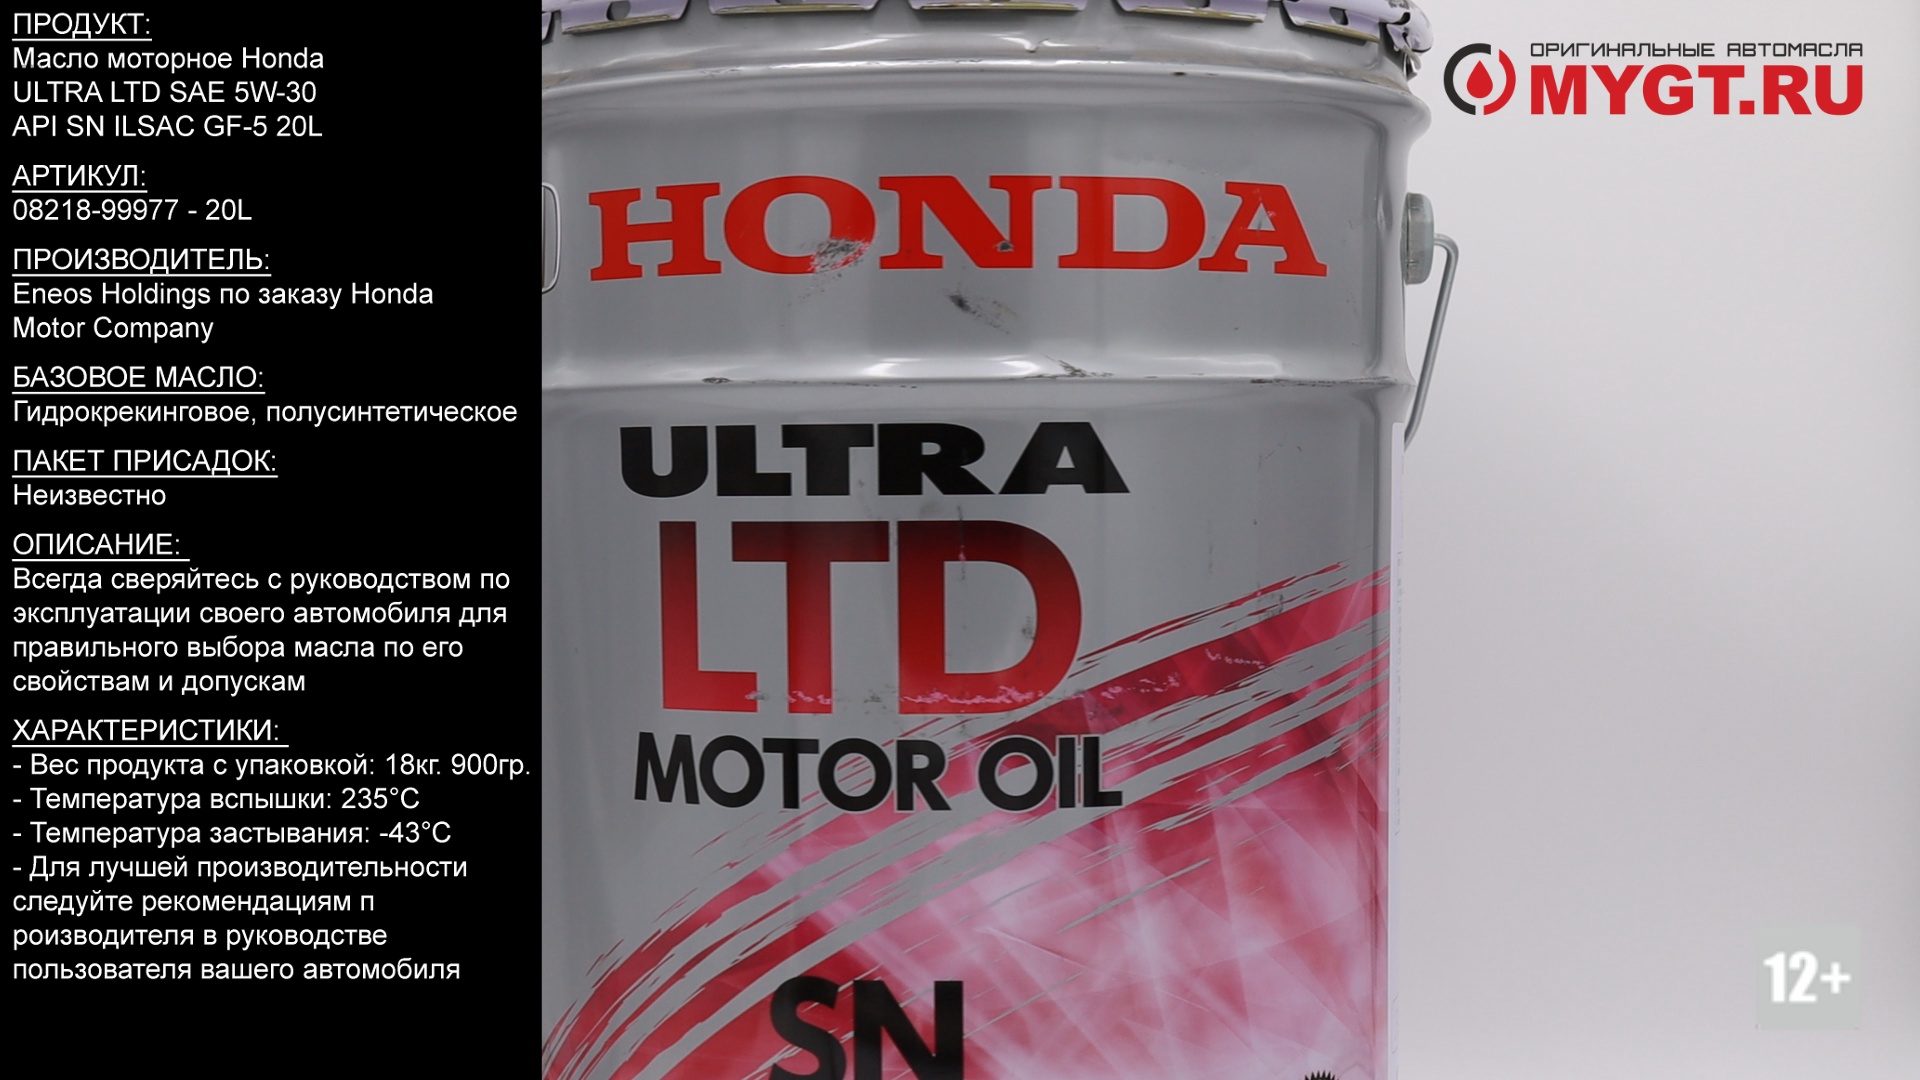 Моторные масла honda купить. Honda Ultra Ltd 5w30 SN. Honda Ultra Leo Motor Oil SN 5w-30 ILSAC gf-5. Honda Ultra Ltd SM 5w-30. Honda Ultra Ltd SAE 5w-30.